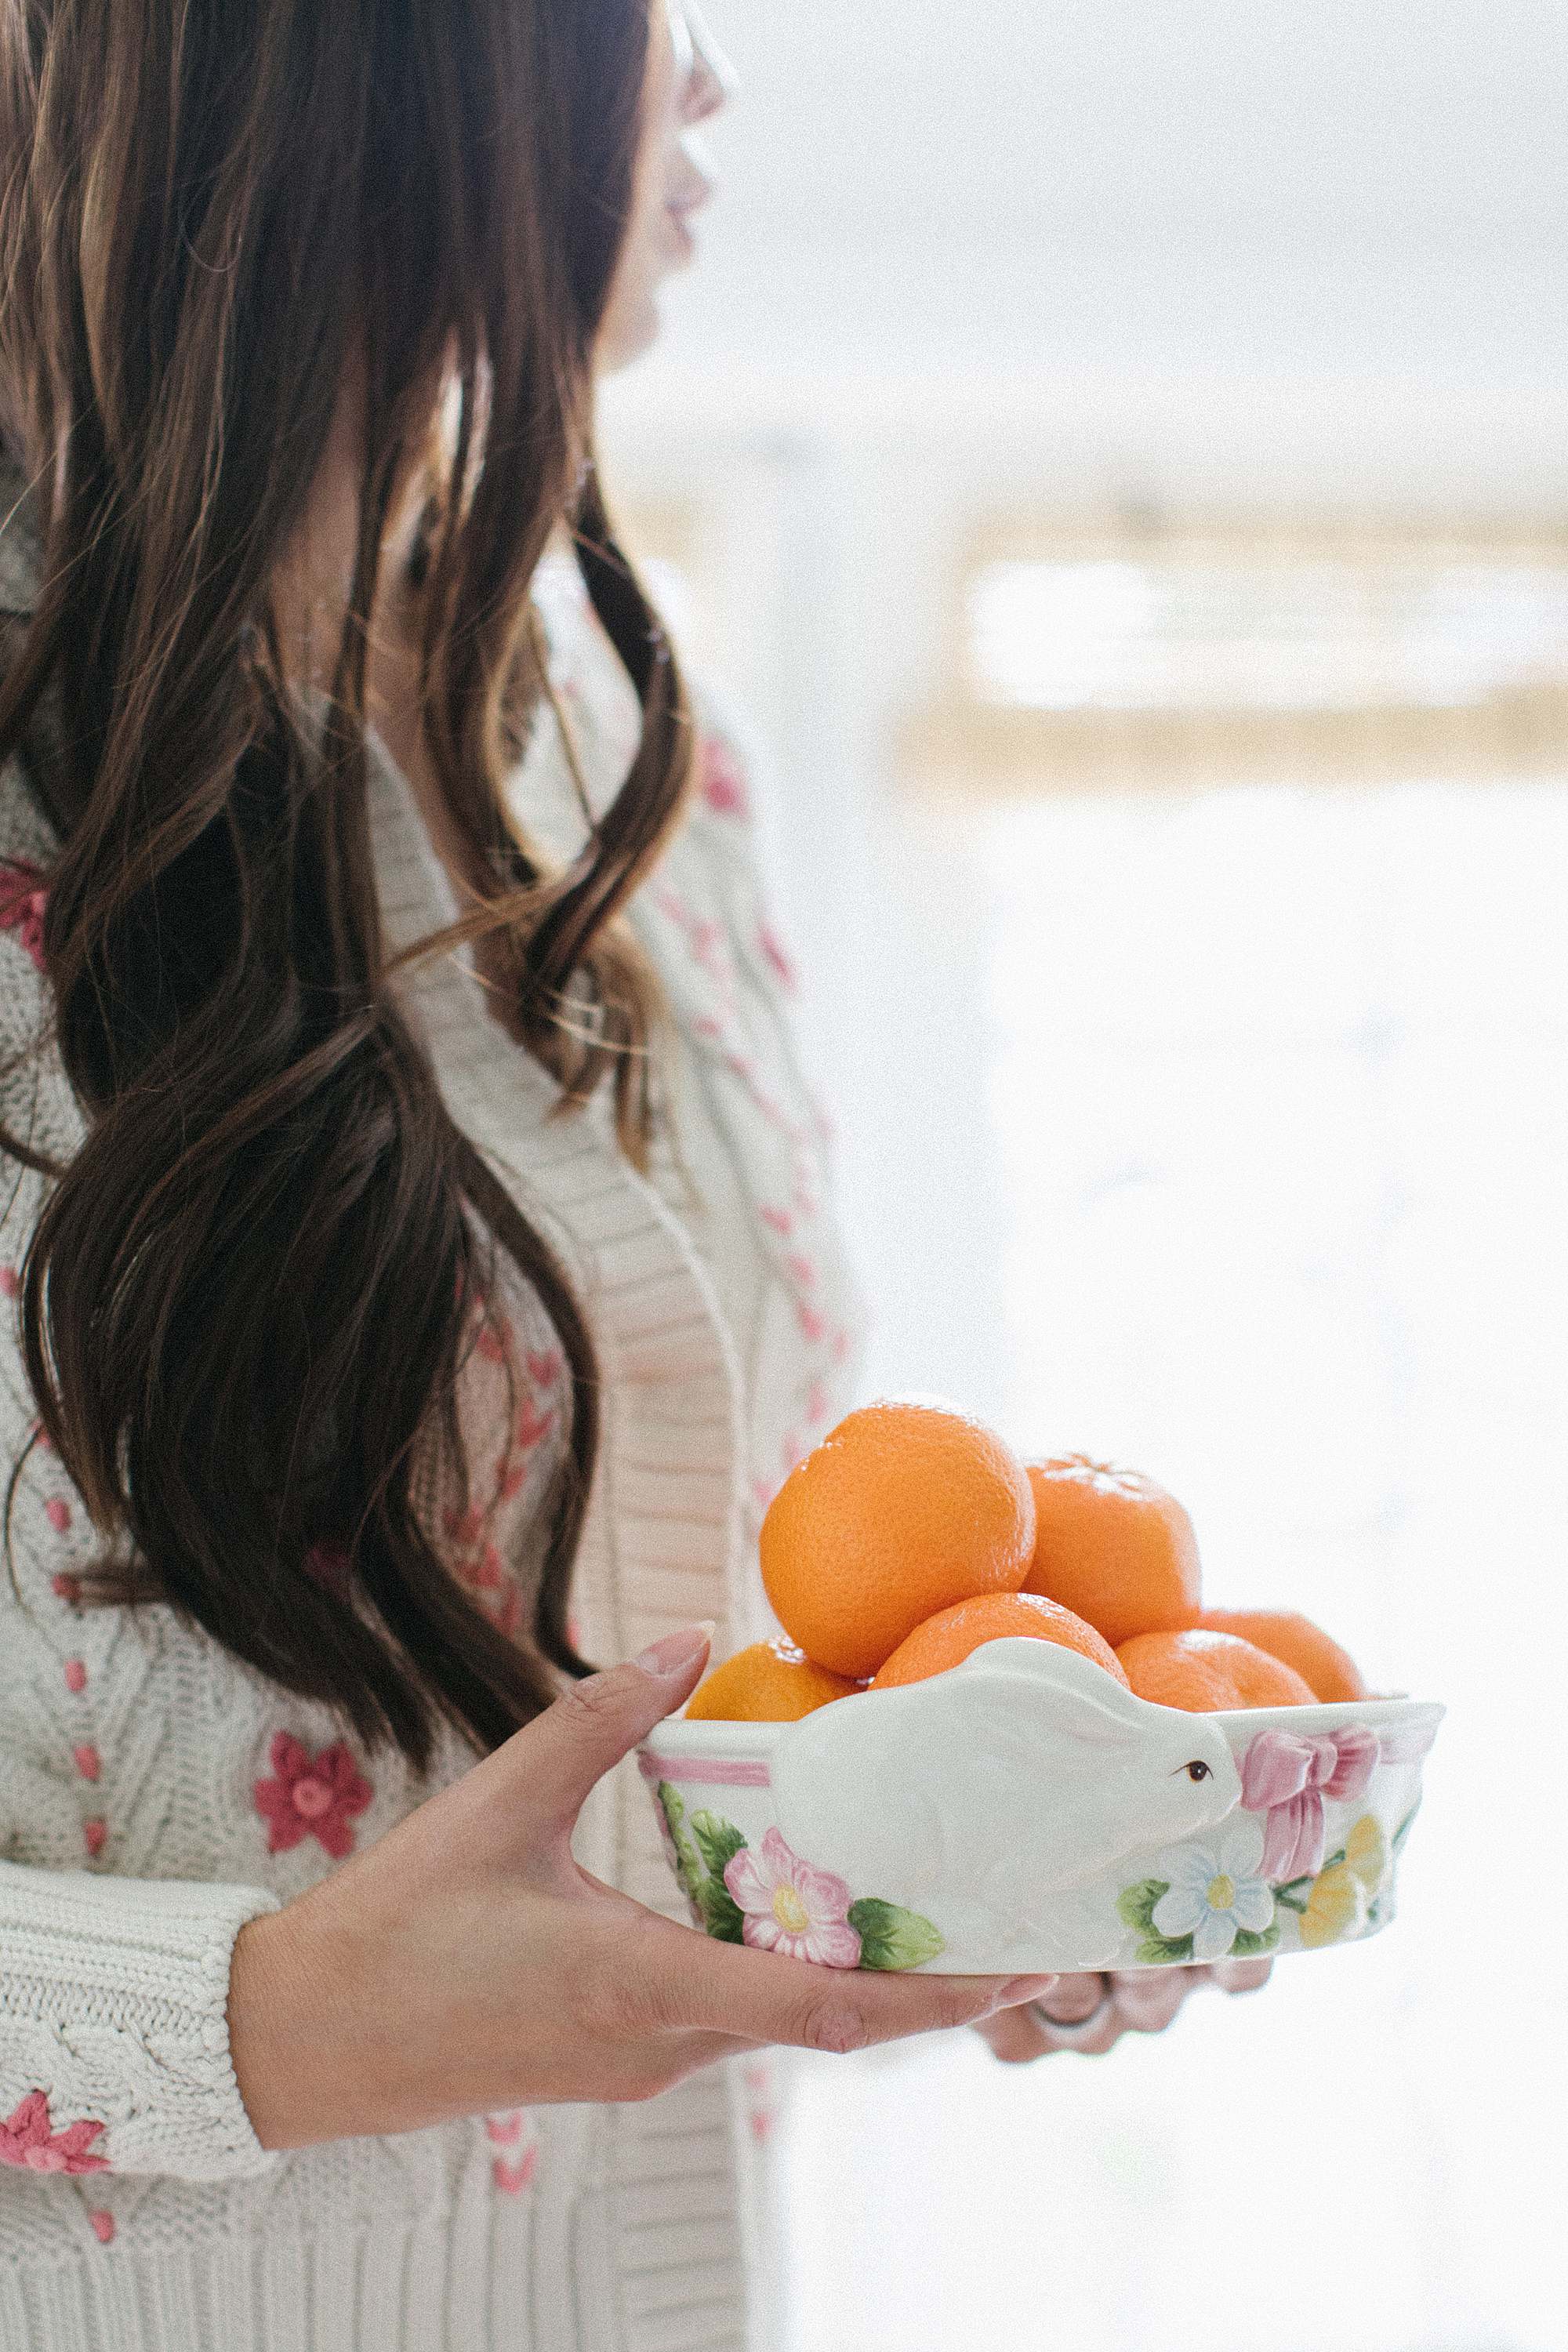 bunny bowl holding oranges